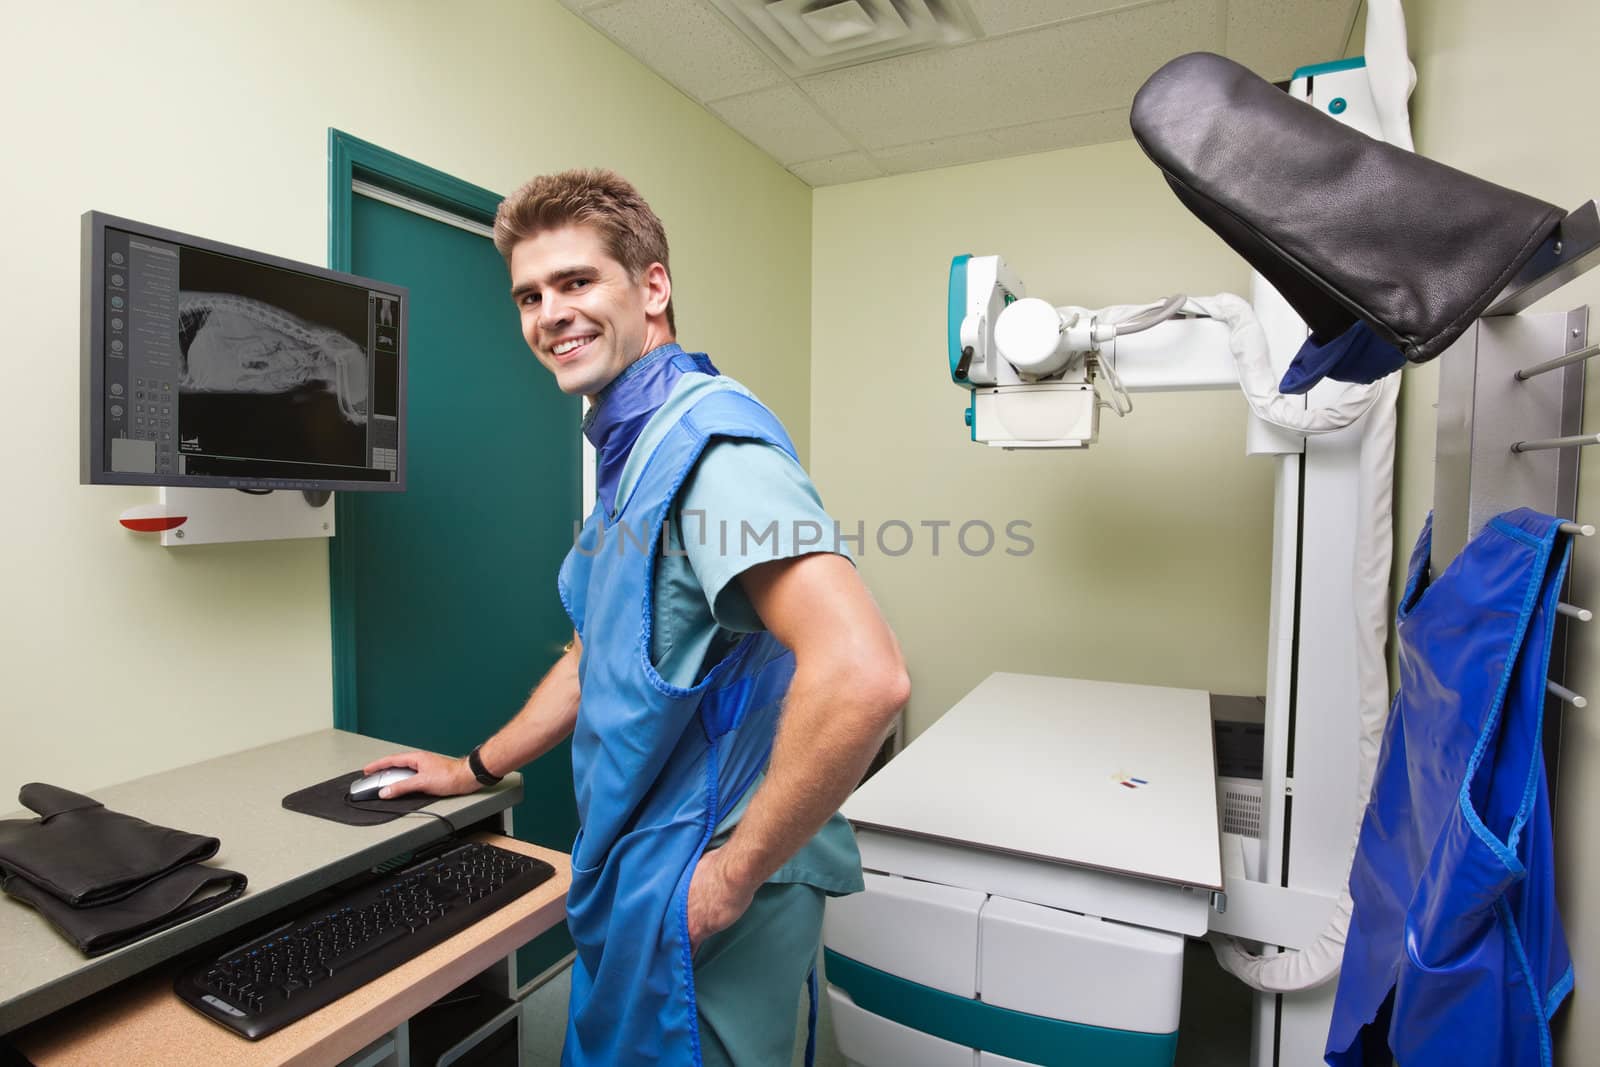 Radiologist examining  dog's x-ray in examination room